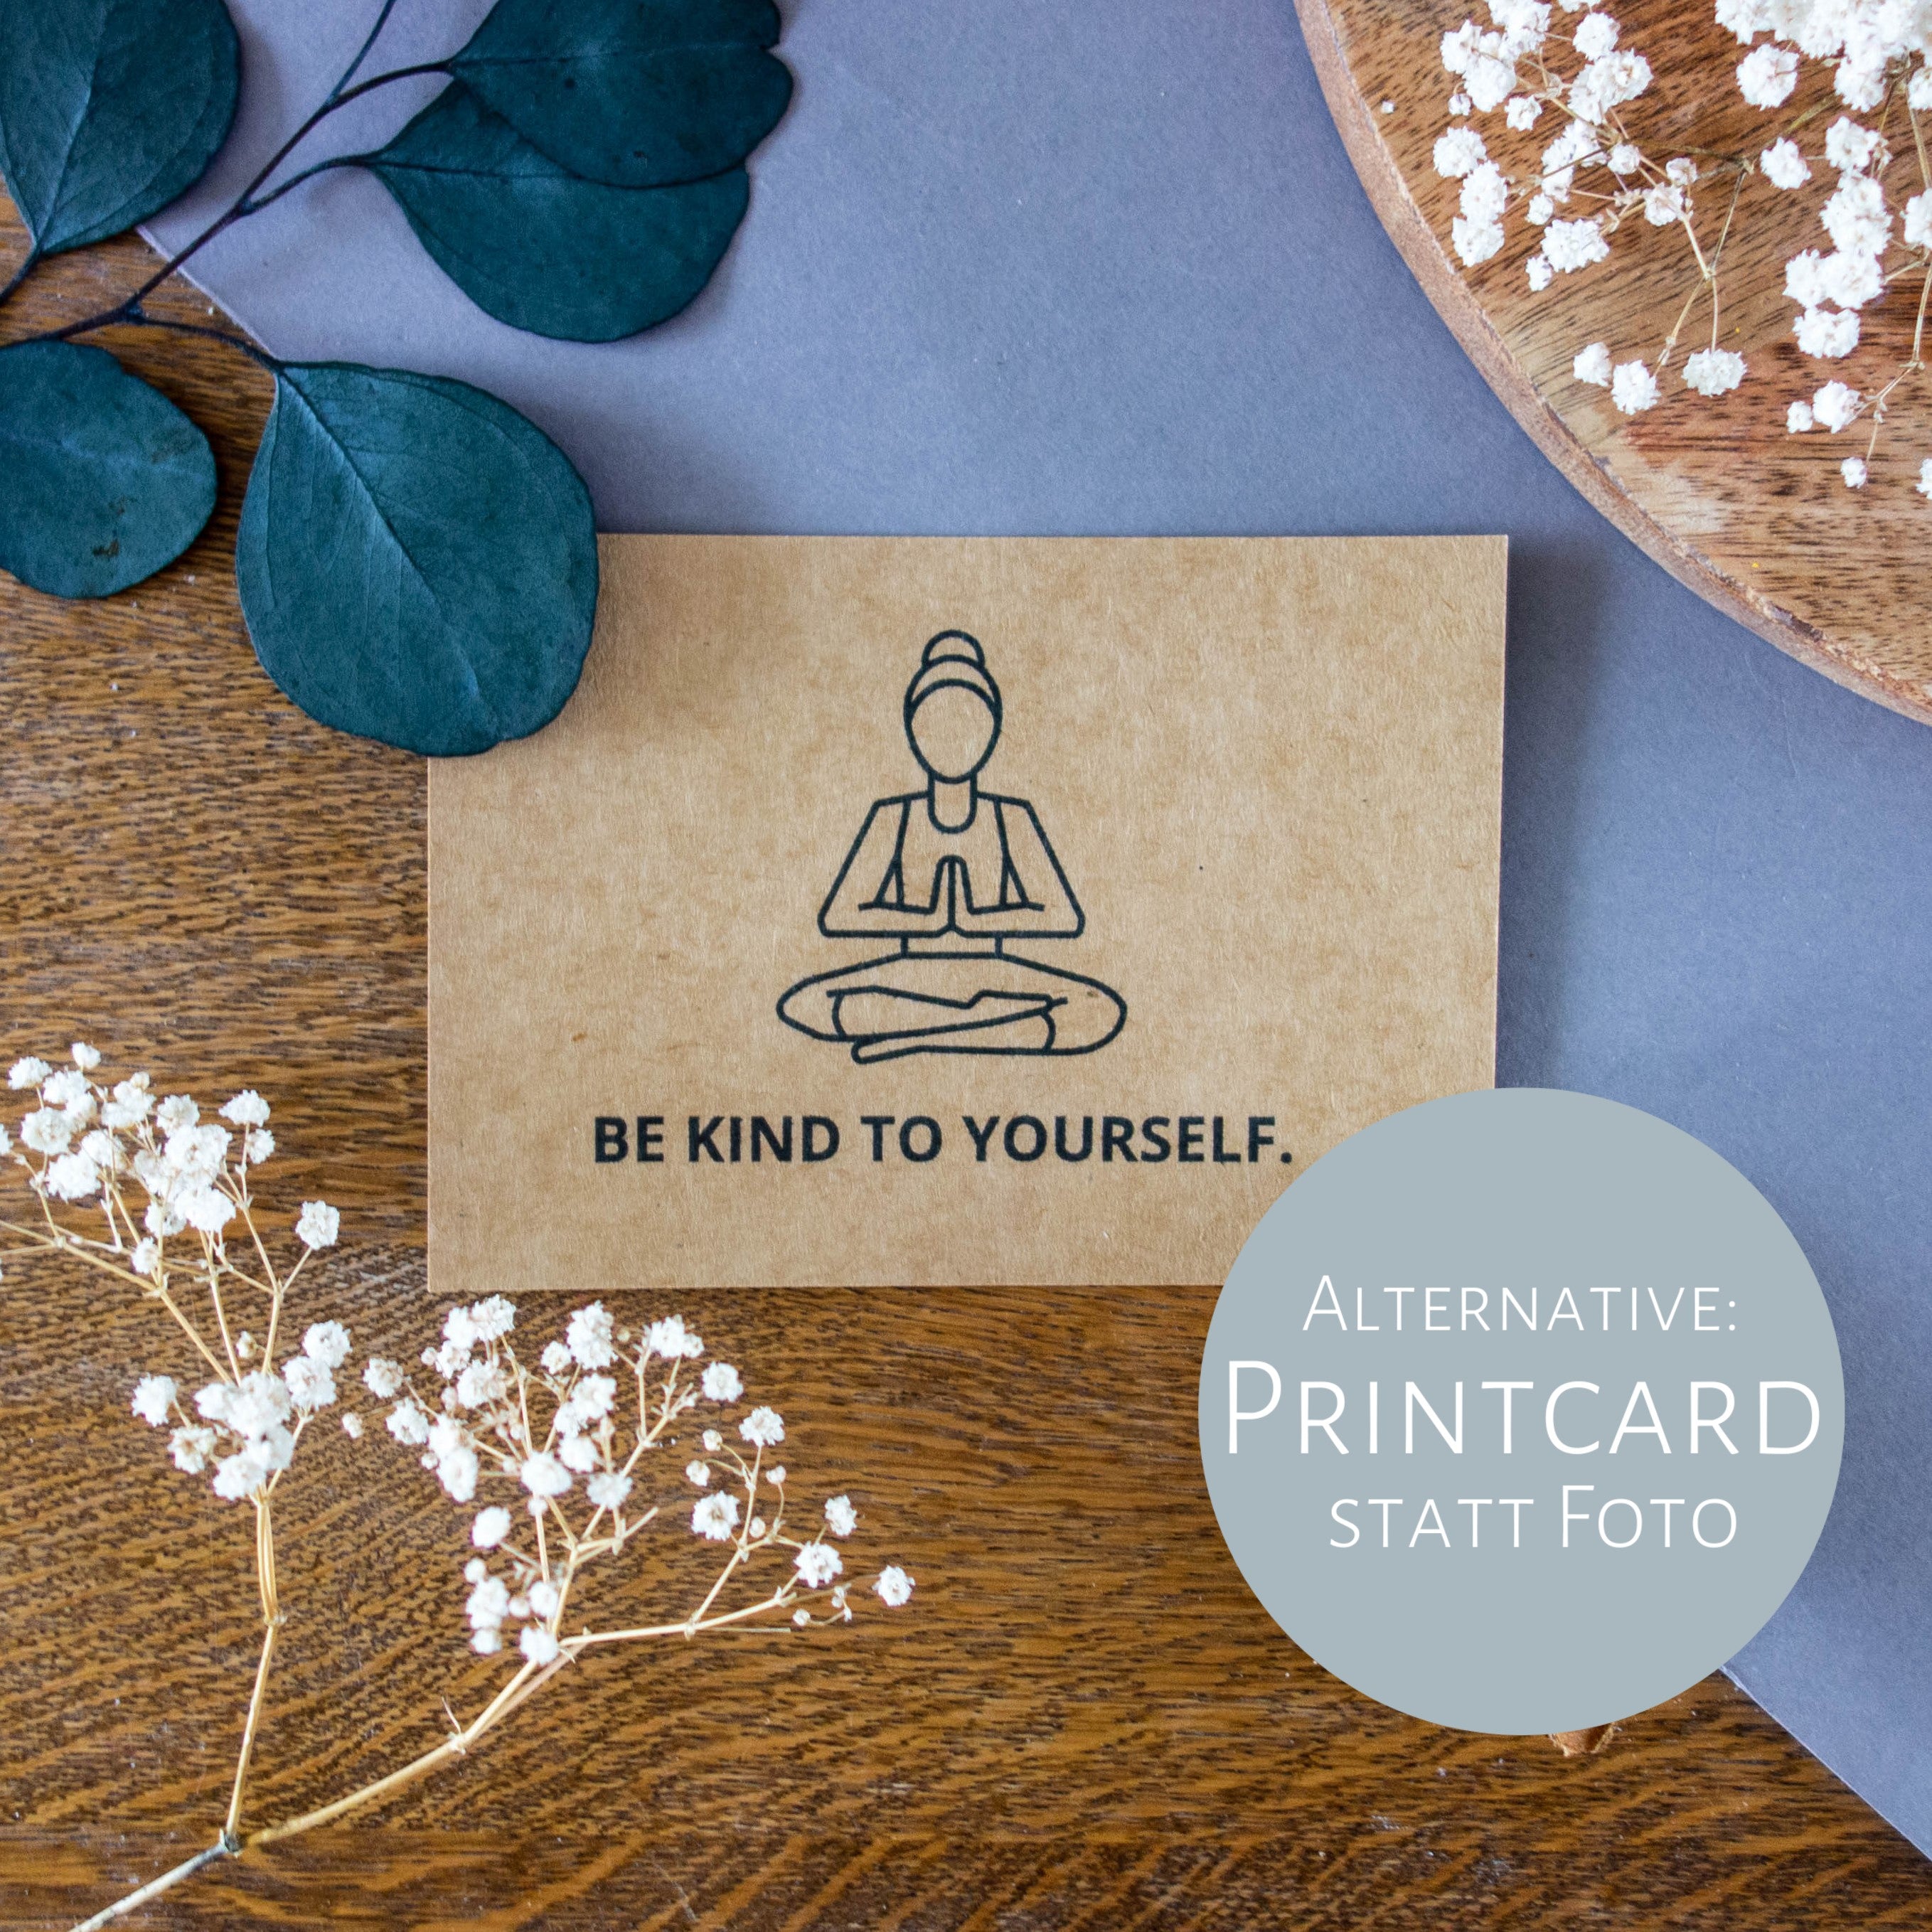 Printcard "Be kind to yourseld" aus Kraftpapier.